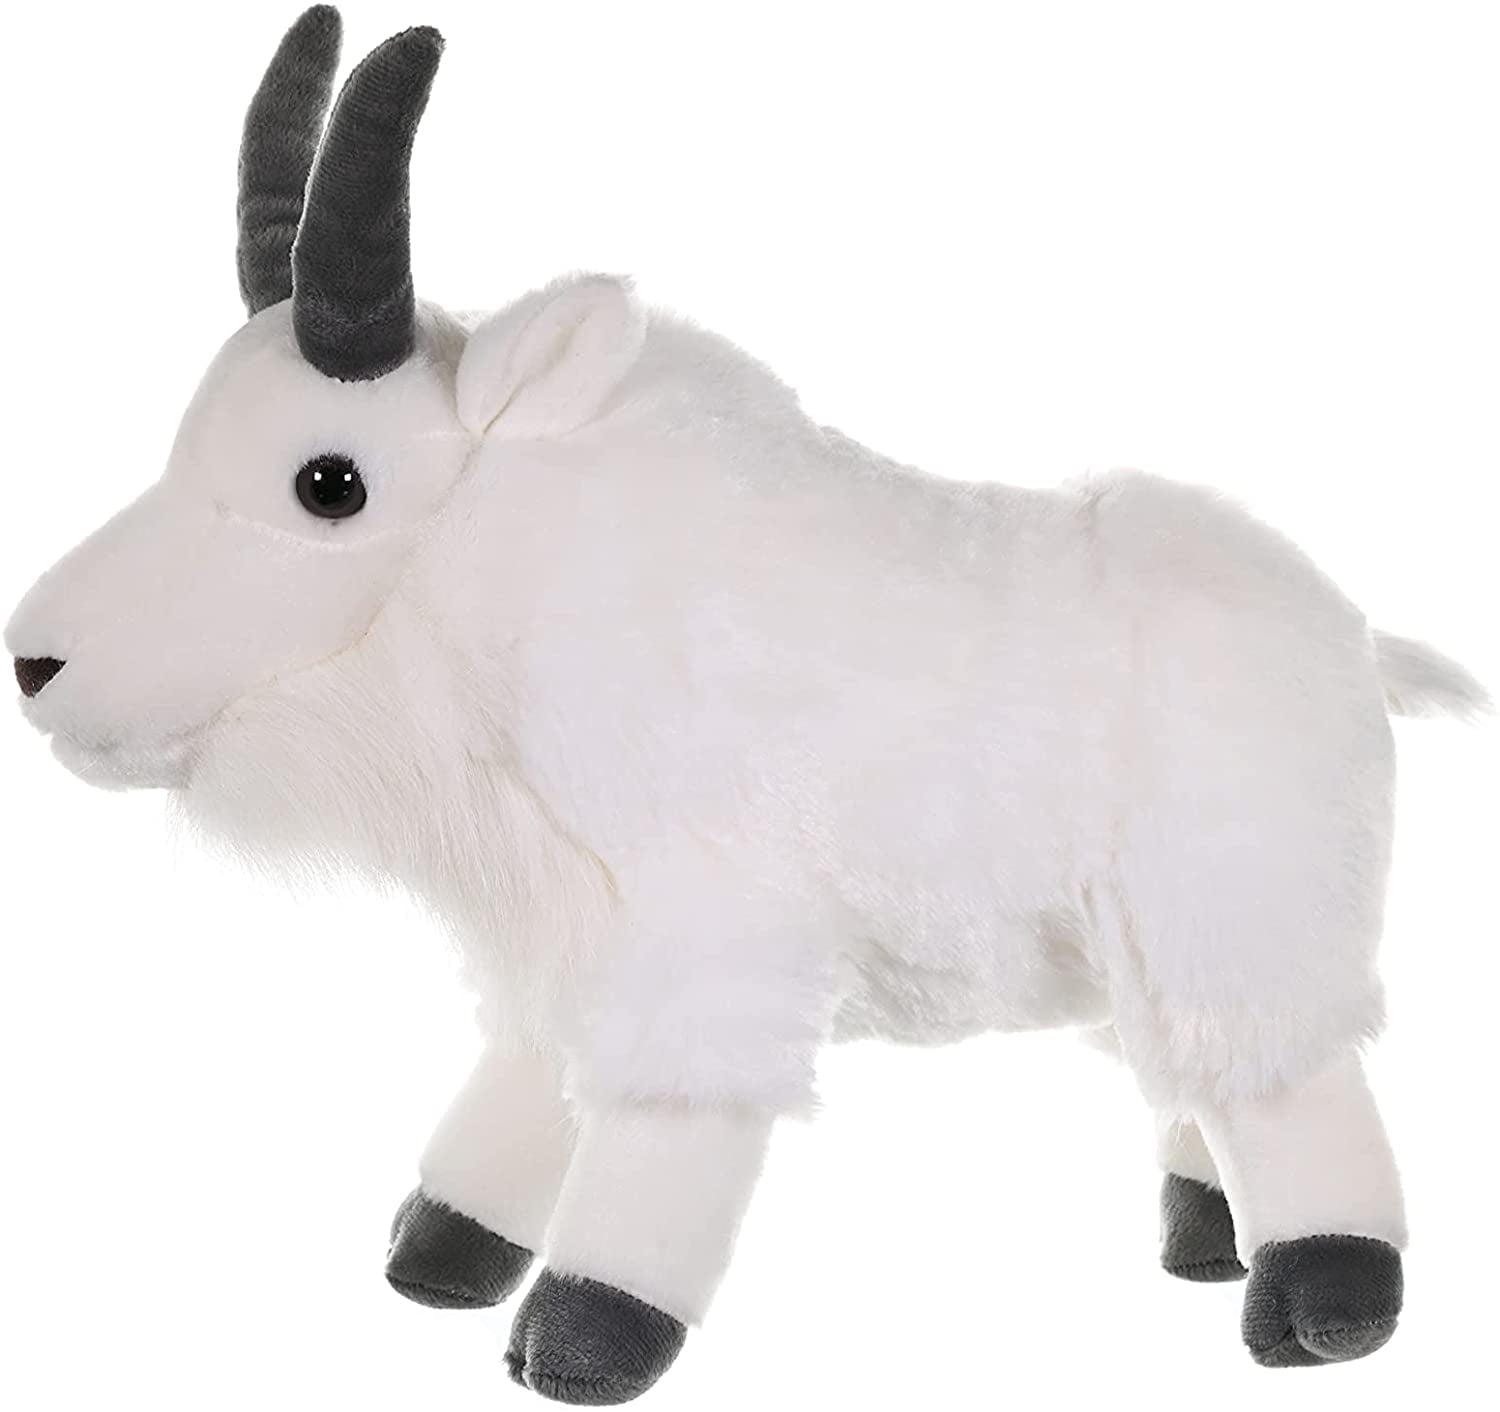 Cuddlekins Mountain Goat Plush Stuffed Animal by Wild Republic, Kid Gifts,  Zoo Animals,12 Inches 